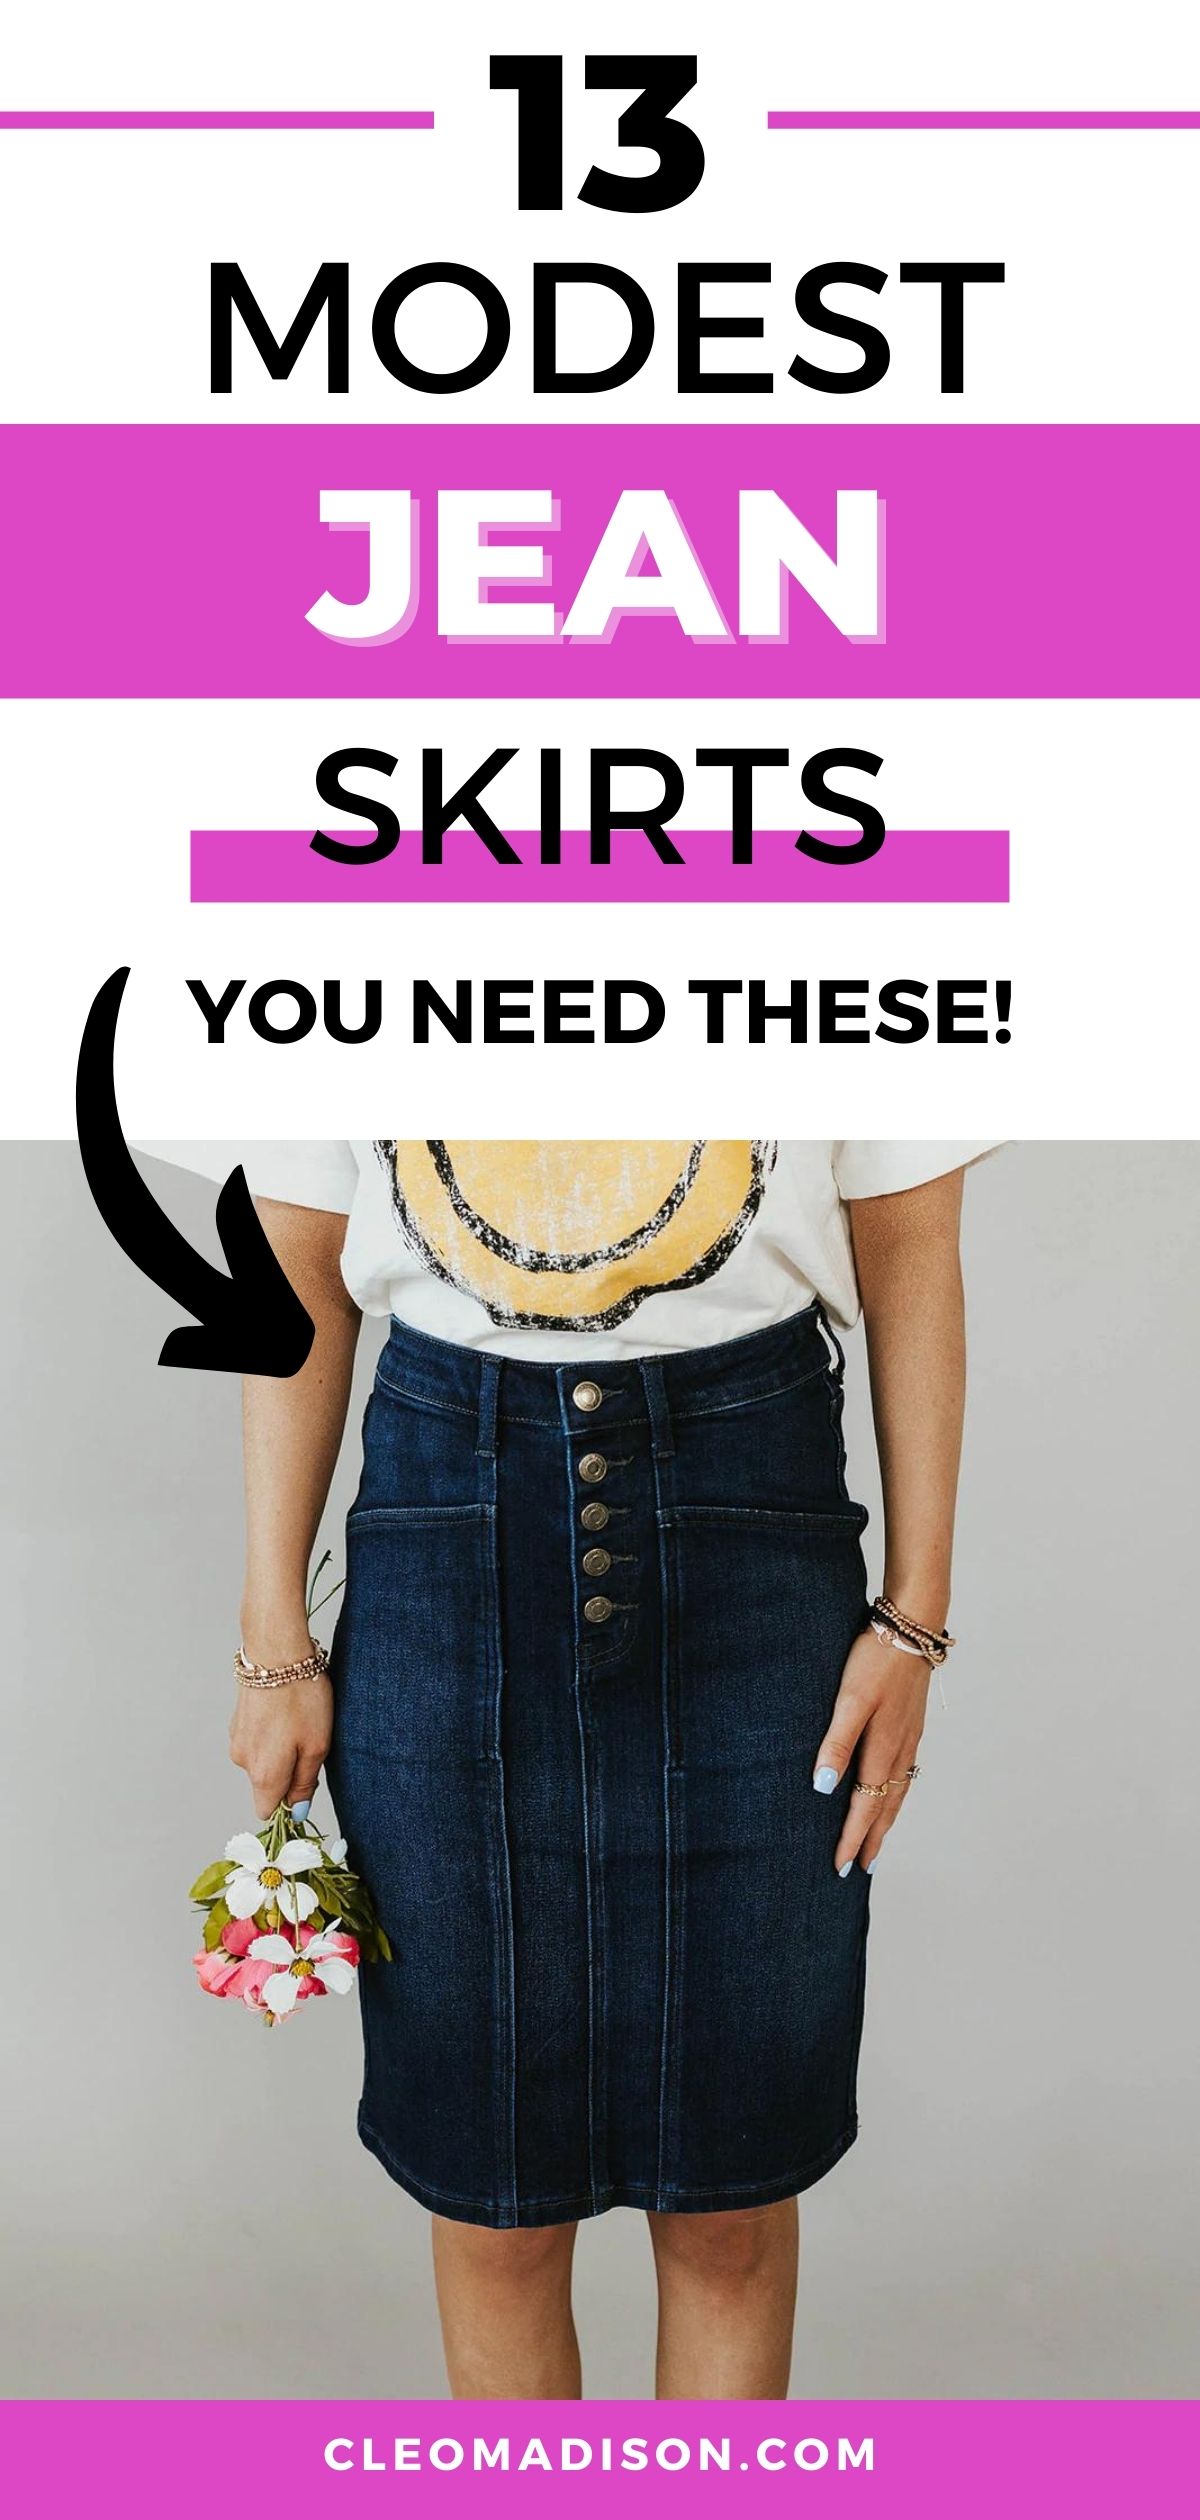 modest jean skirts